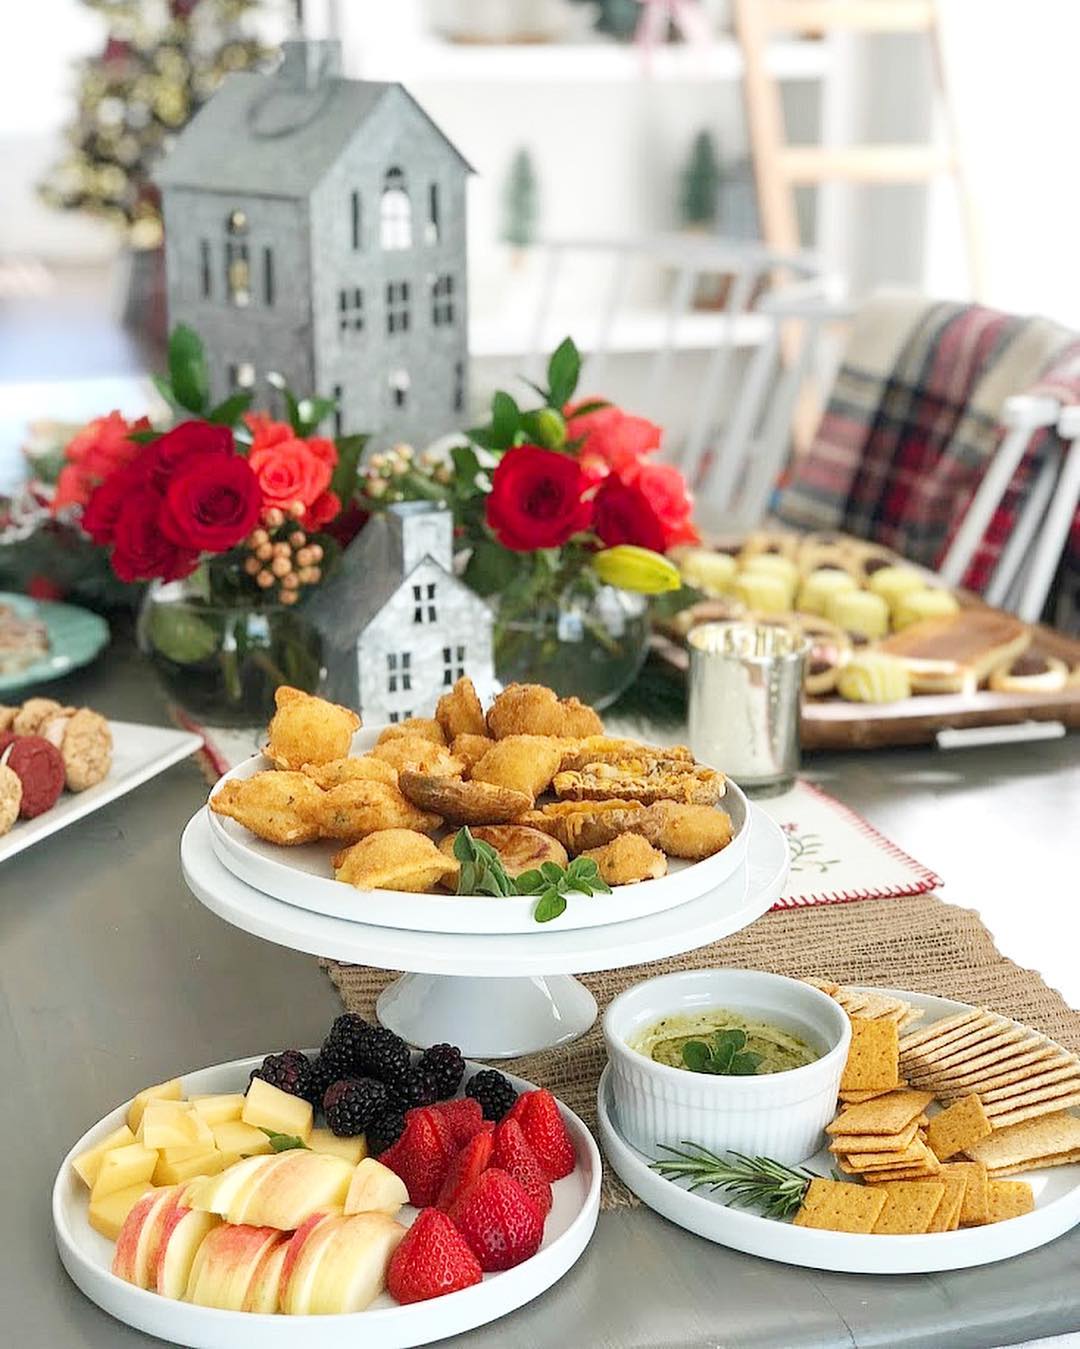 Buffet-style holiday meal. Photo by Instagram user @tatertotsandjello